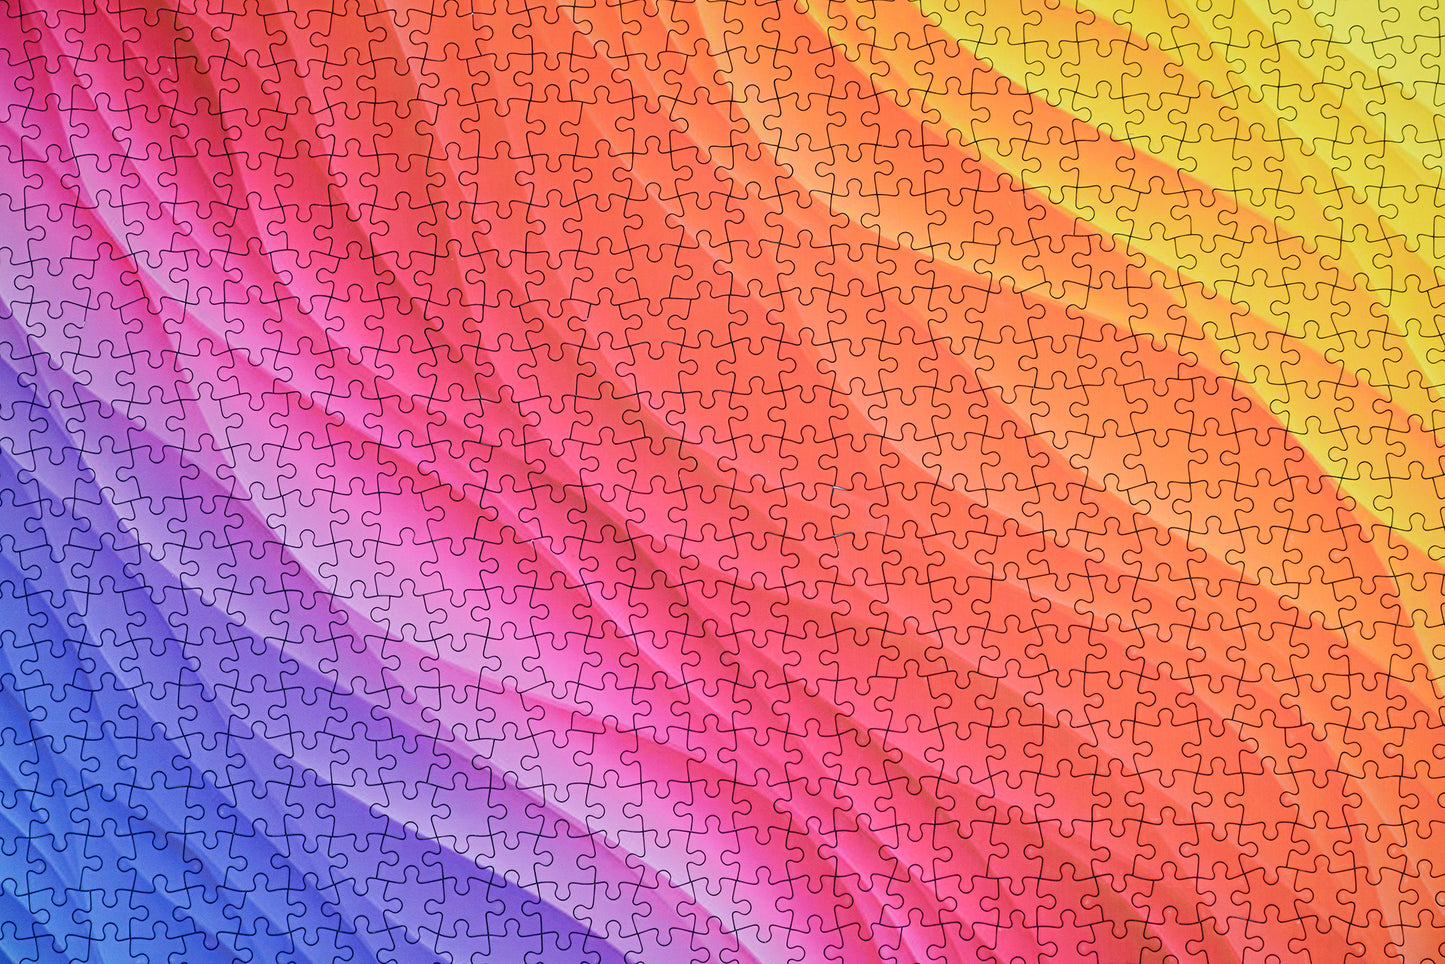 Wavy Rainbow - Impuzzible No.3 - 1000 Pieces Jigsaw Puzzle